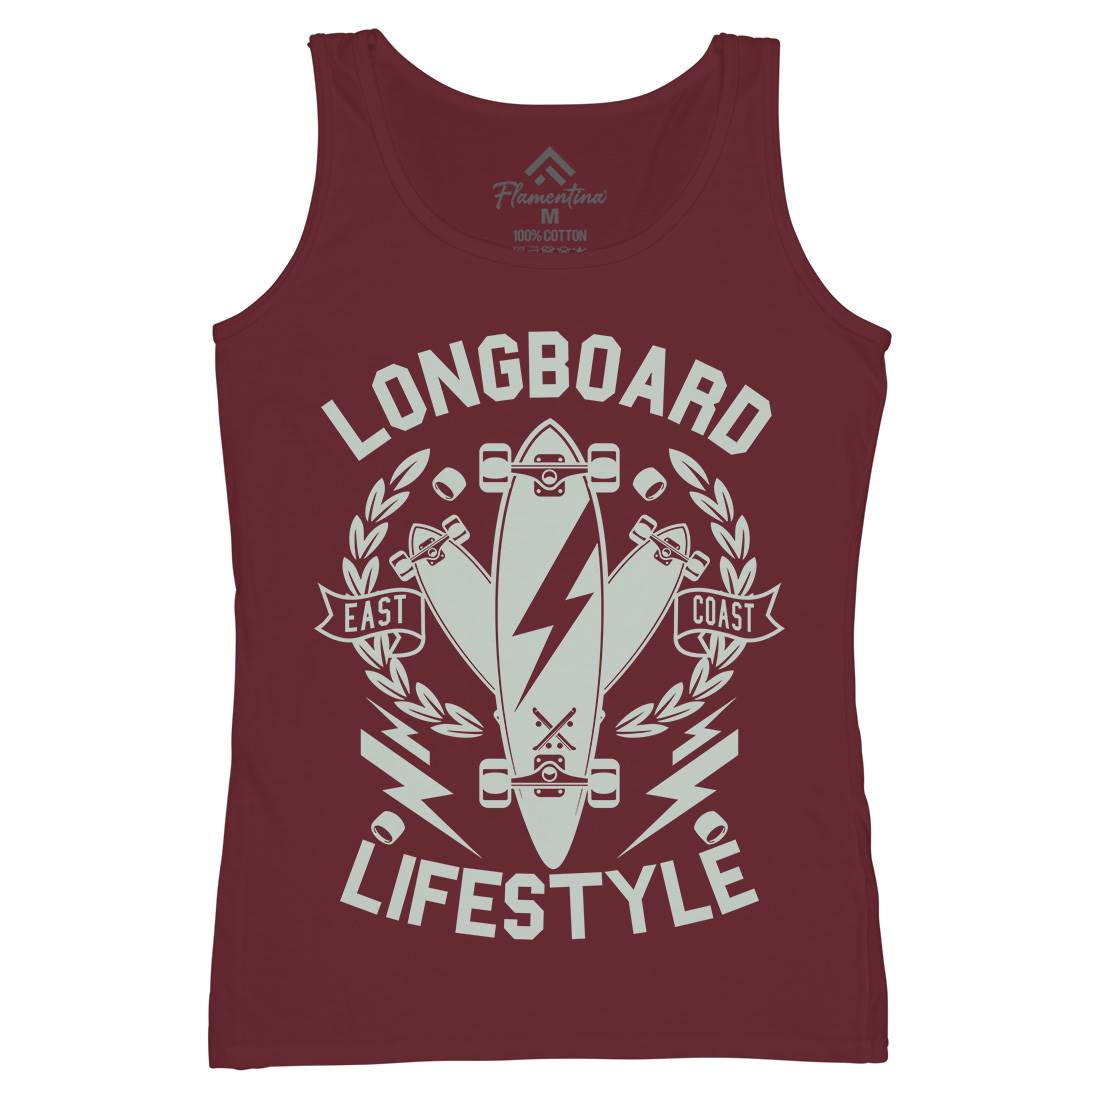 Longboard Lifestyle Womens Organic Tank Top Vest Skate A251